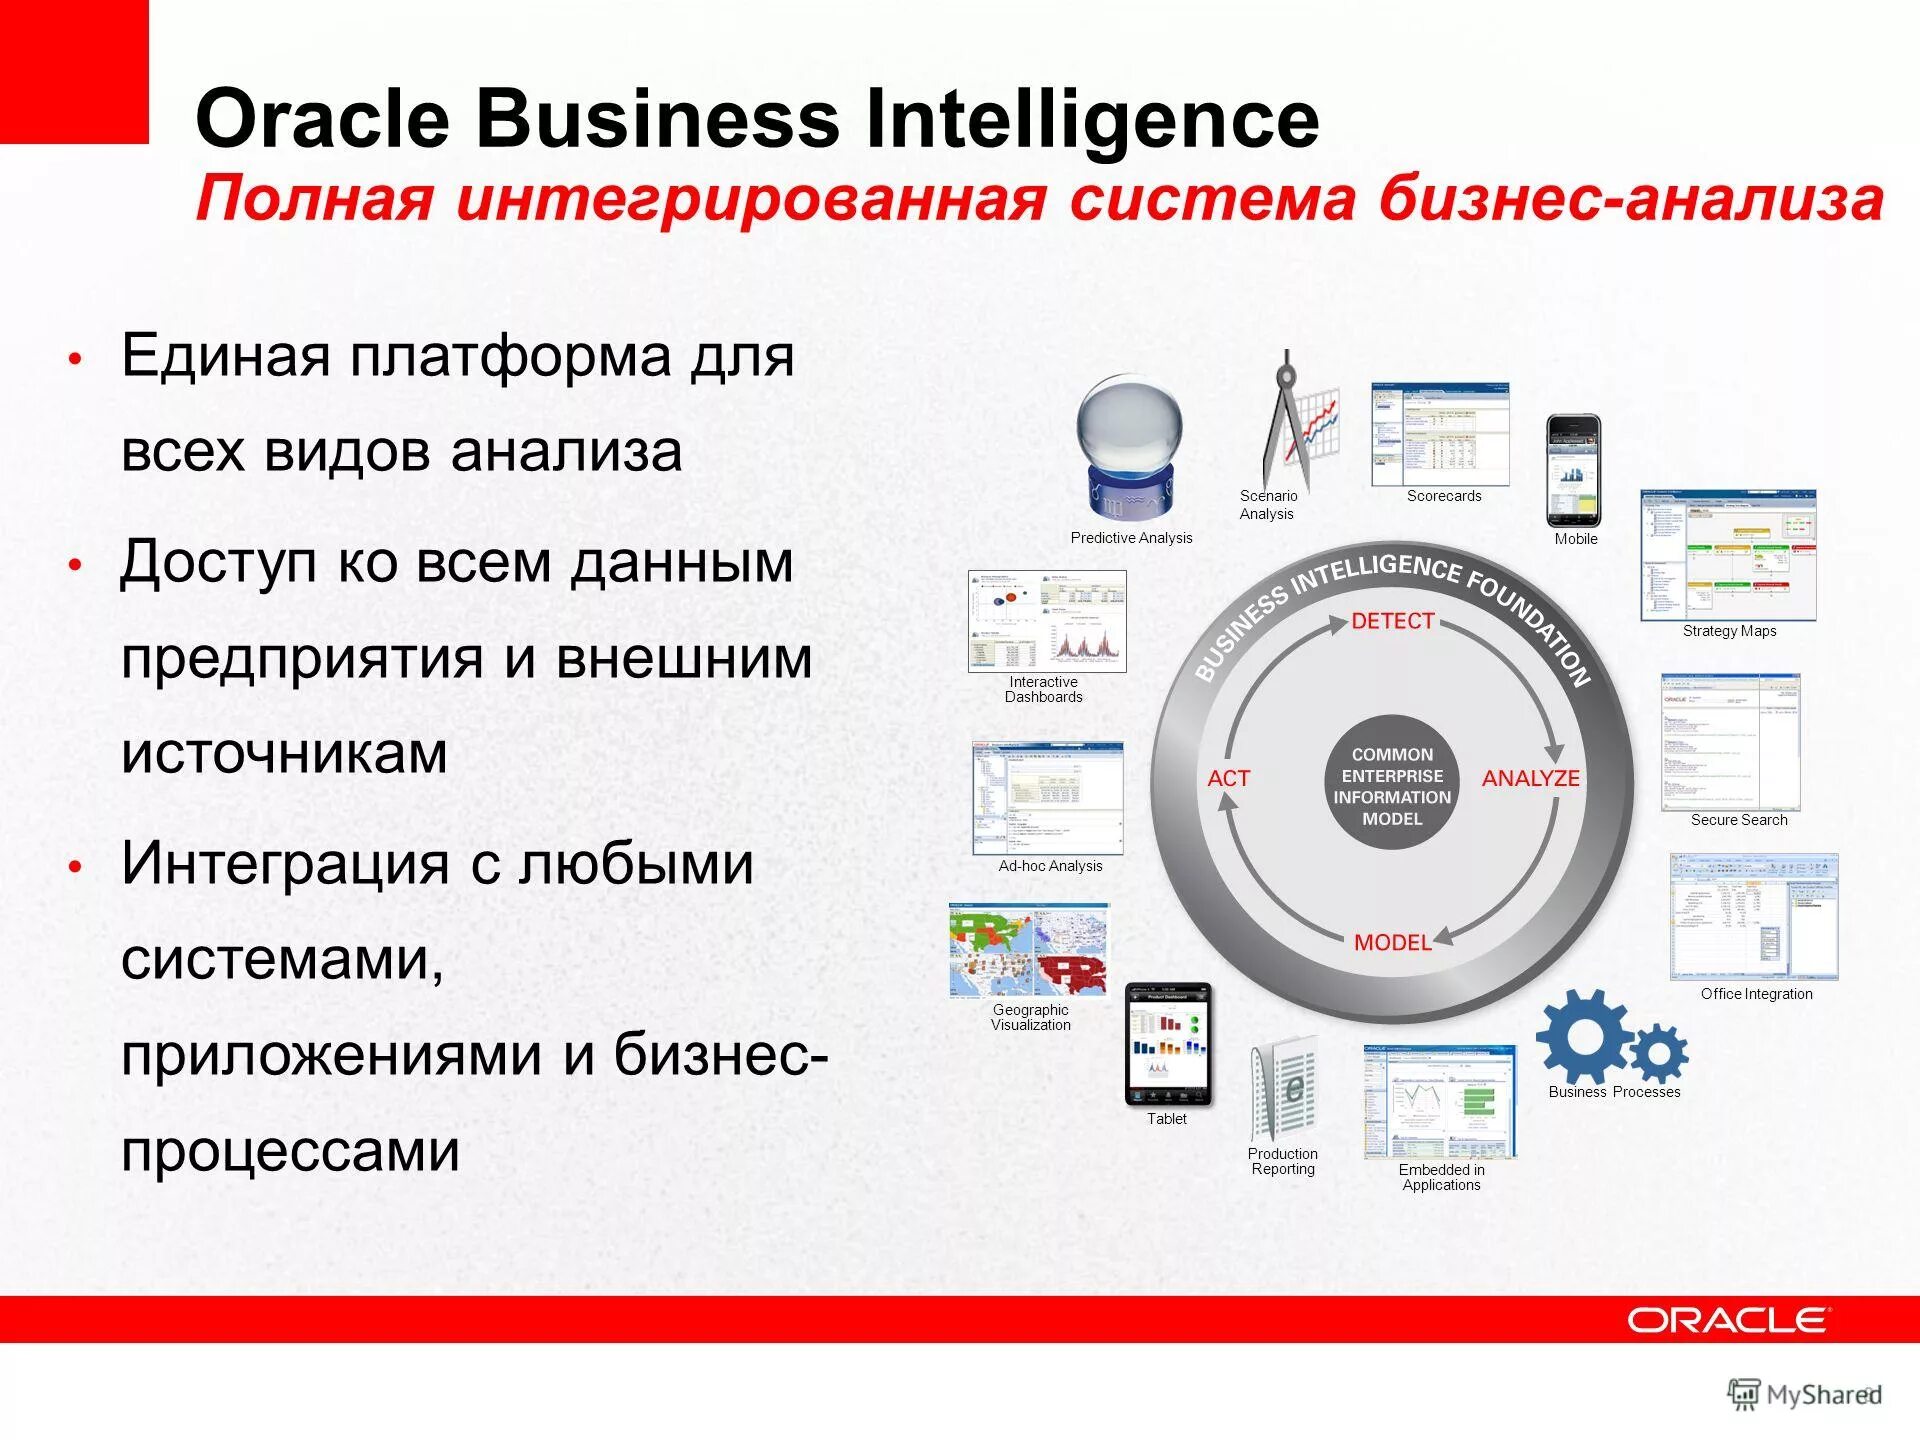 Аналитический доступ. Oracle Business Intelligence. Анализ данных. "Oracle для девочек". Oracle 8.